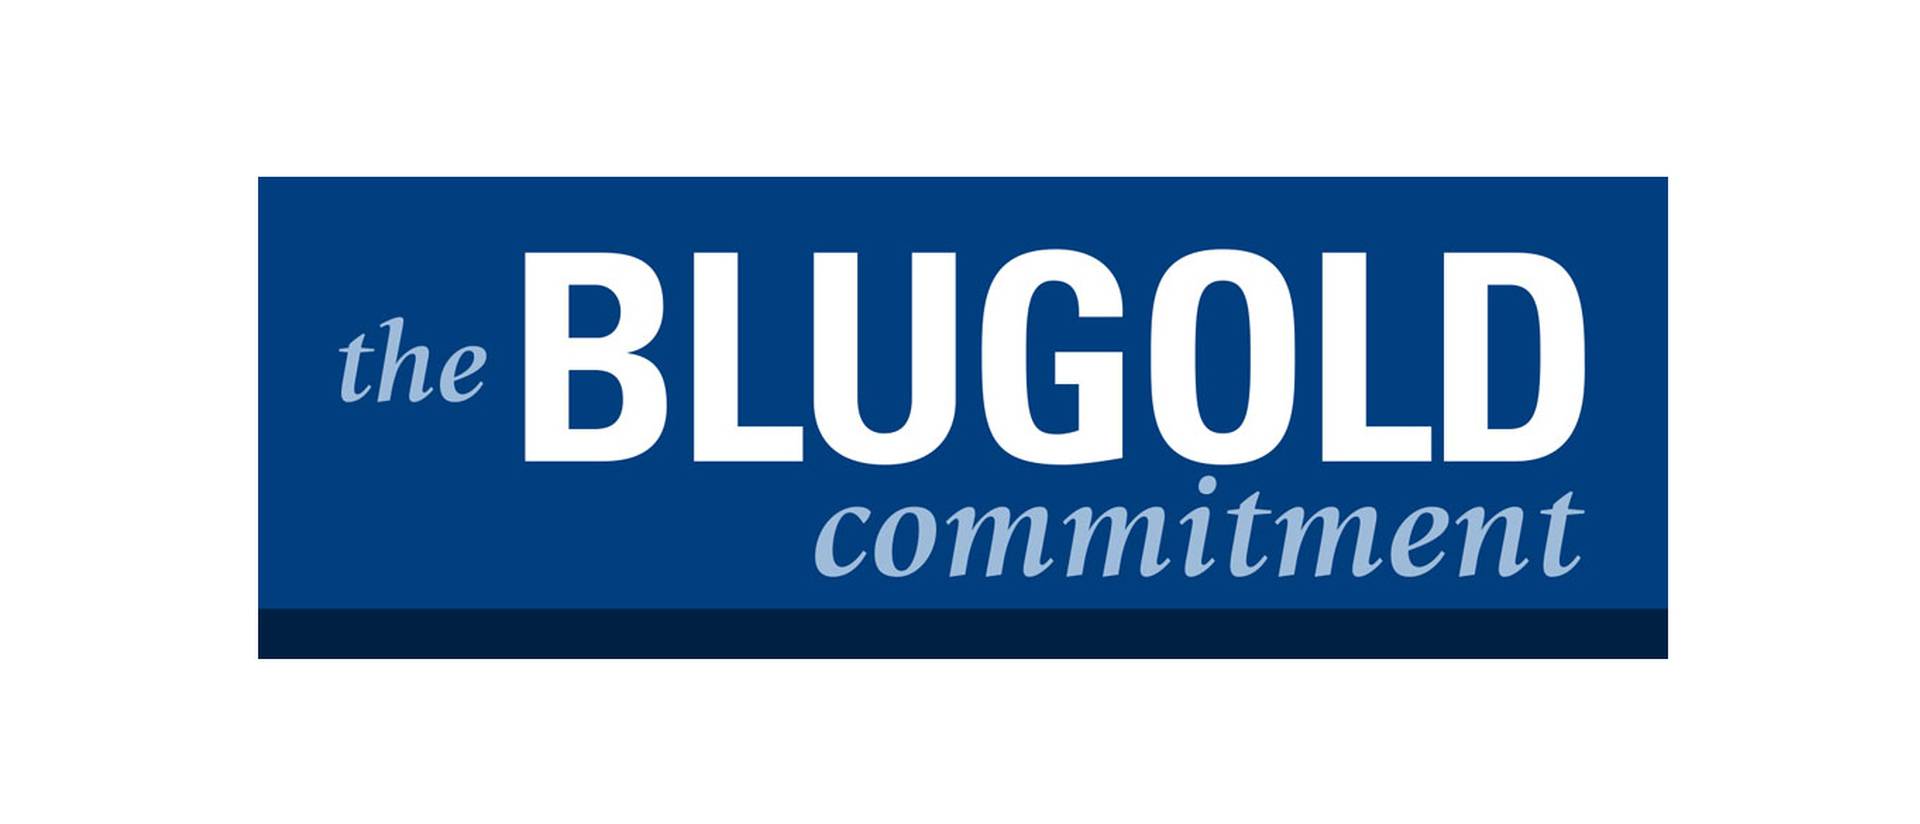 Board of Regents OKs Blugold Commitment